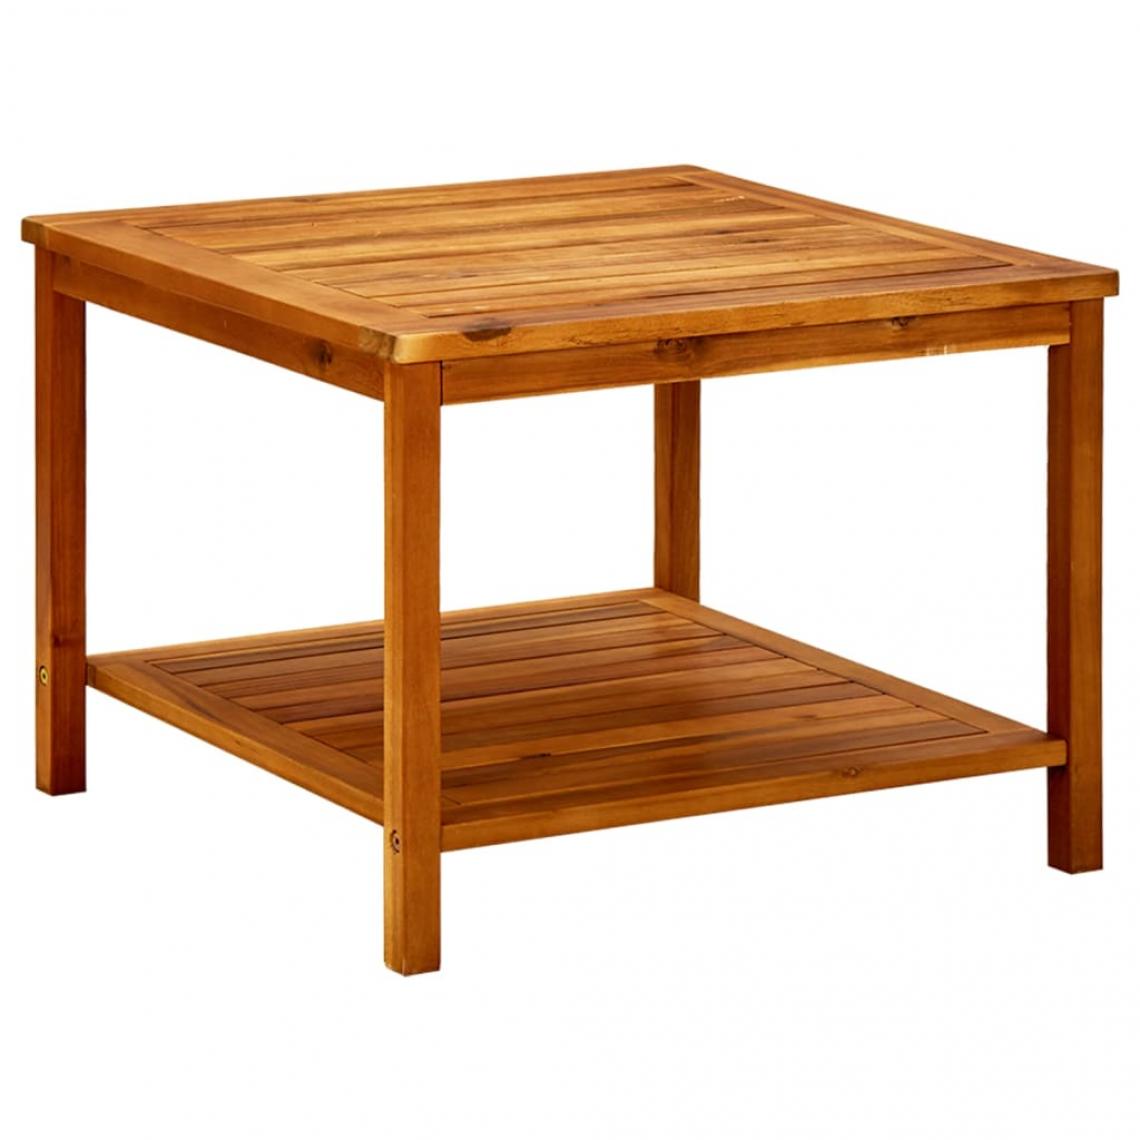 Vidaxl - vidaXL Table basse 60x60x45 cm Bois d'acacia solide - Tables basses